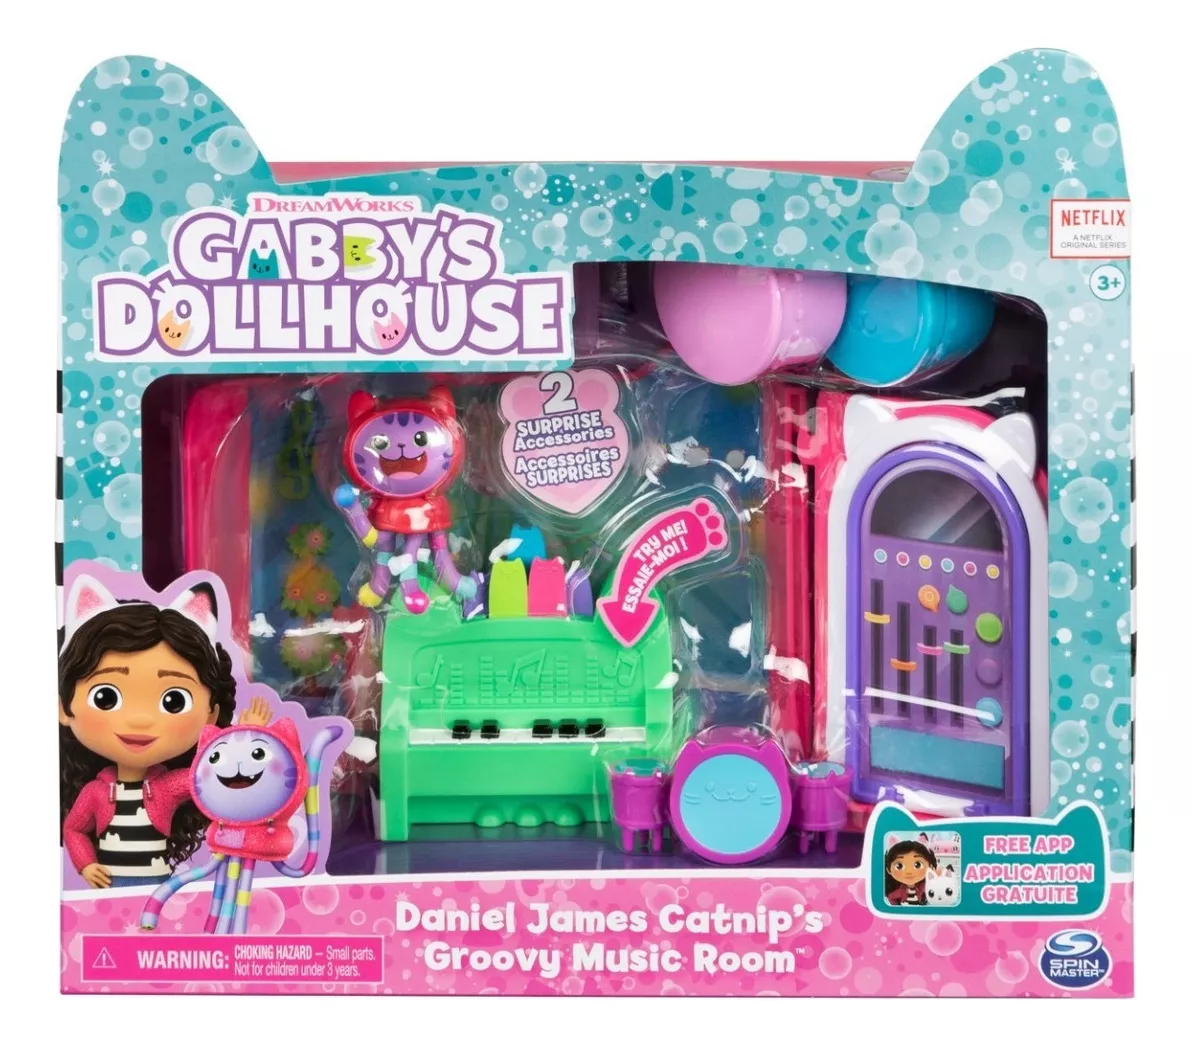 Tercera imagen para búsqueda de gabby's dollhouse